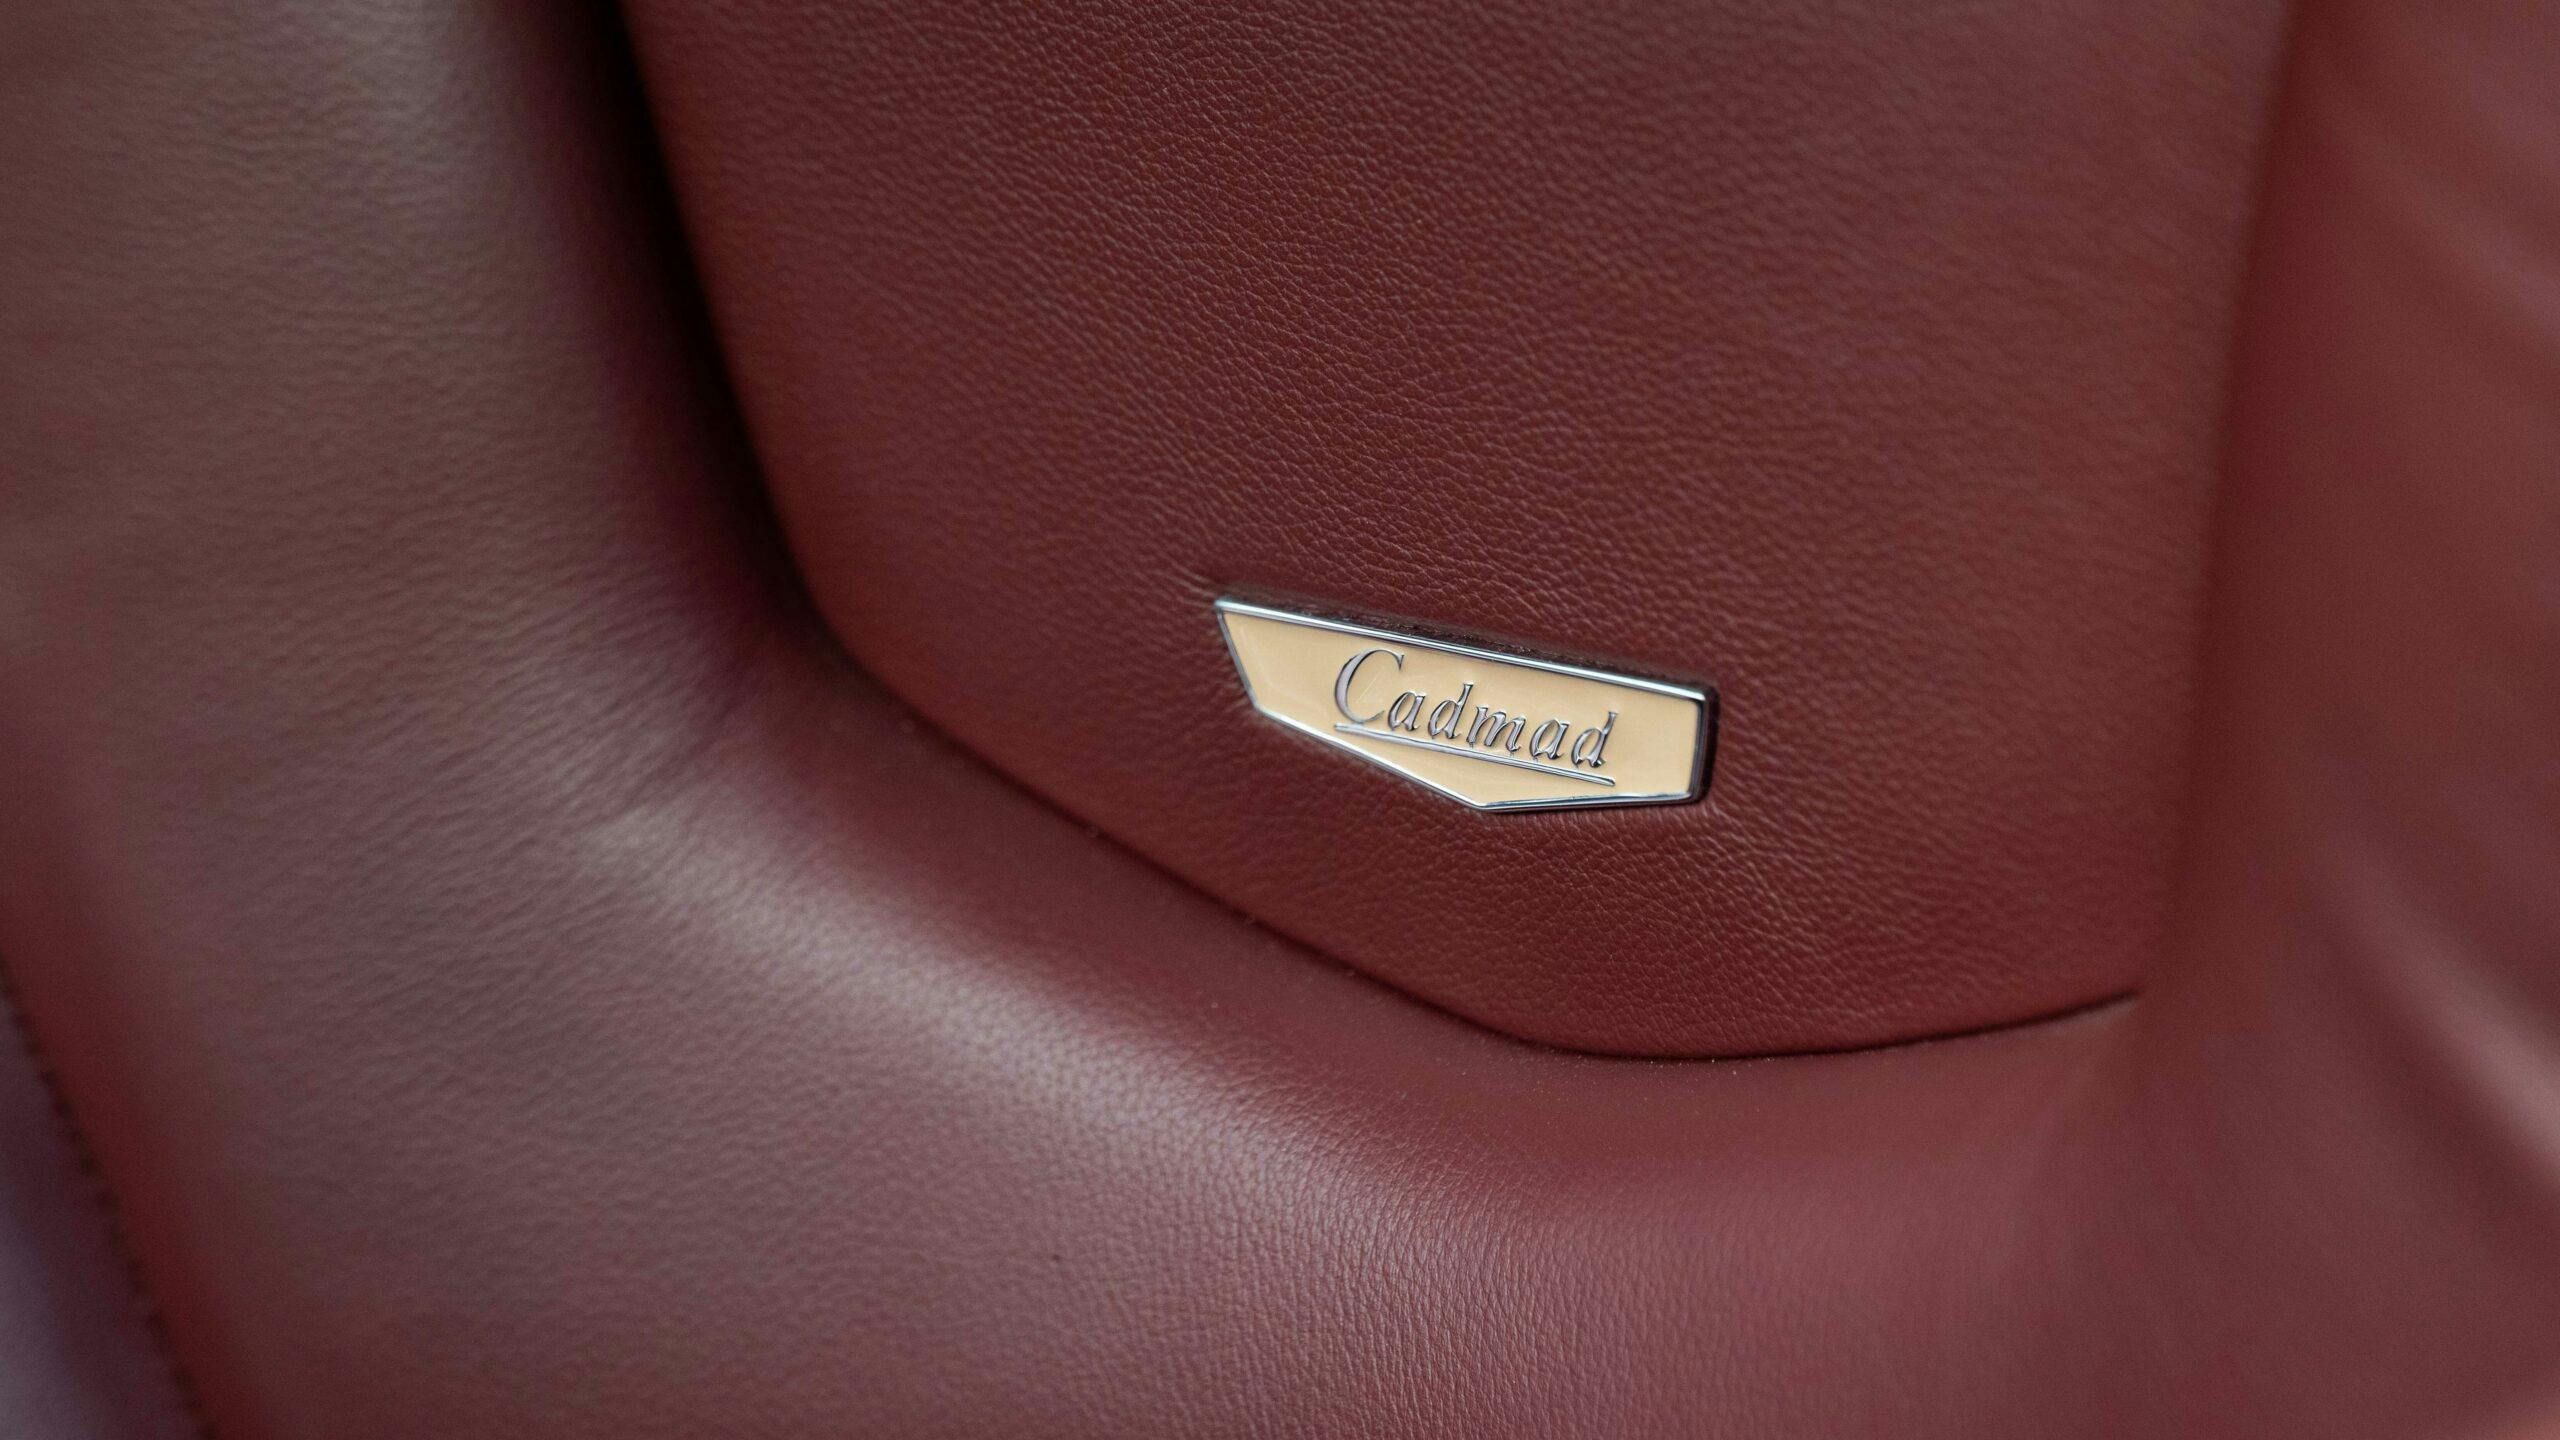 CadMad prize winning 1959 Cadillac Eldorado Brougham Custom Station Wagon seat detail